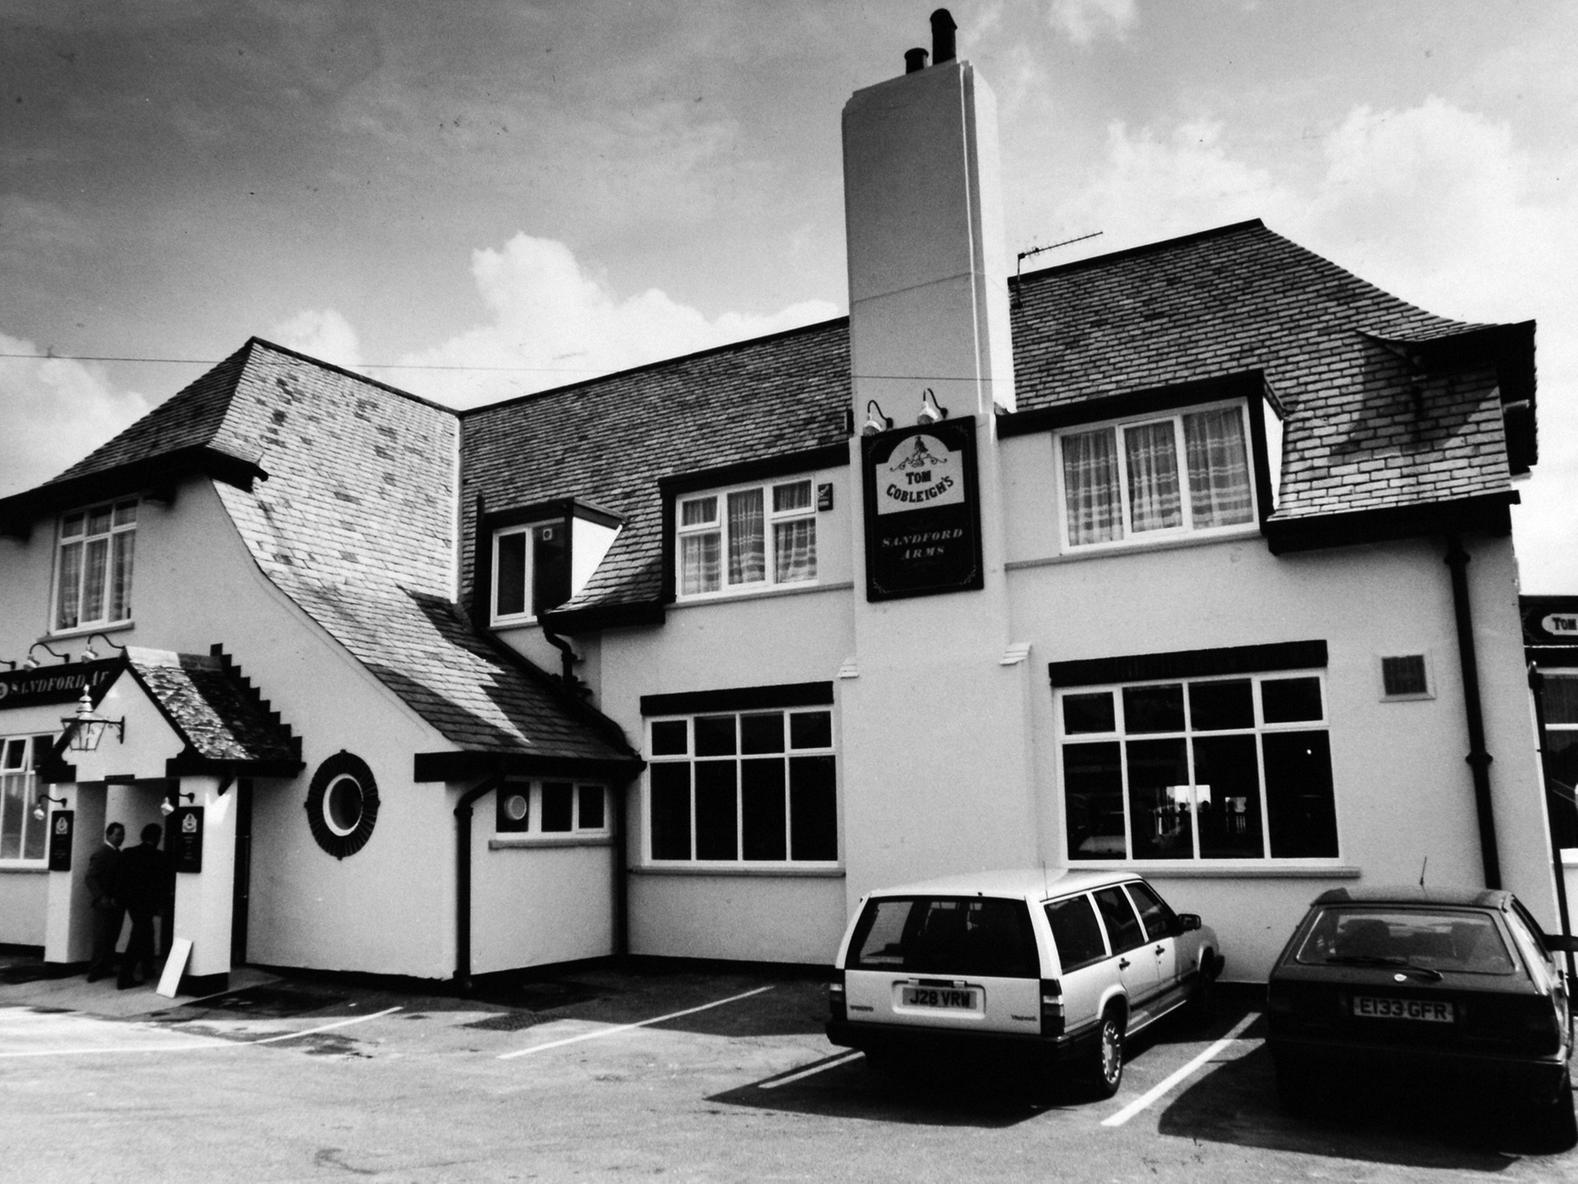 The Sandford Arms pub.